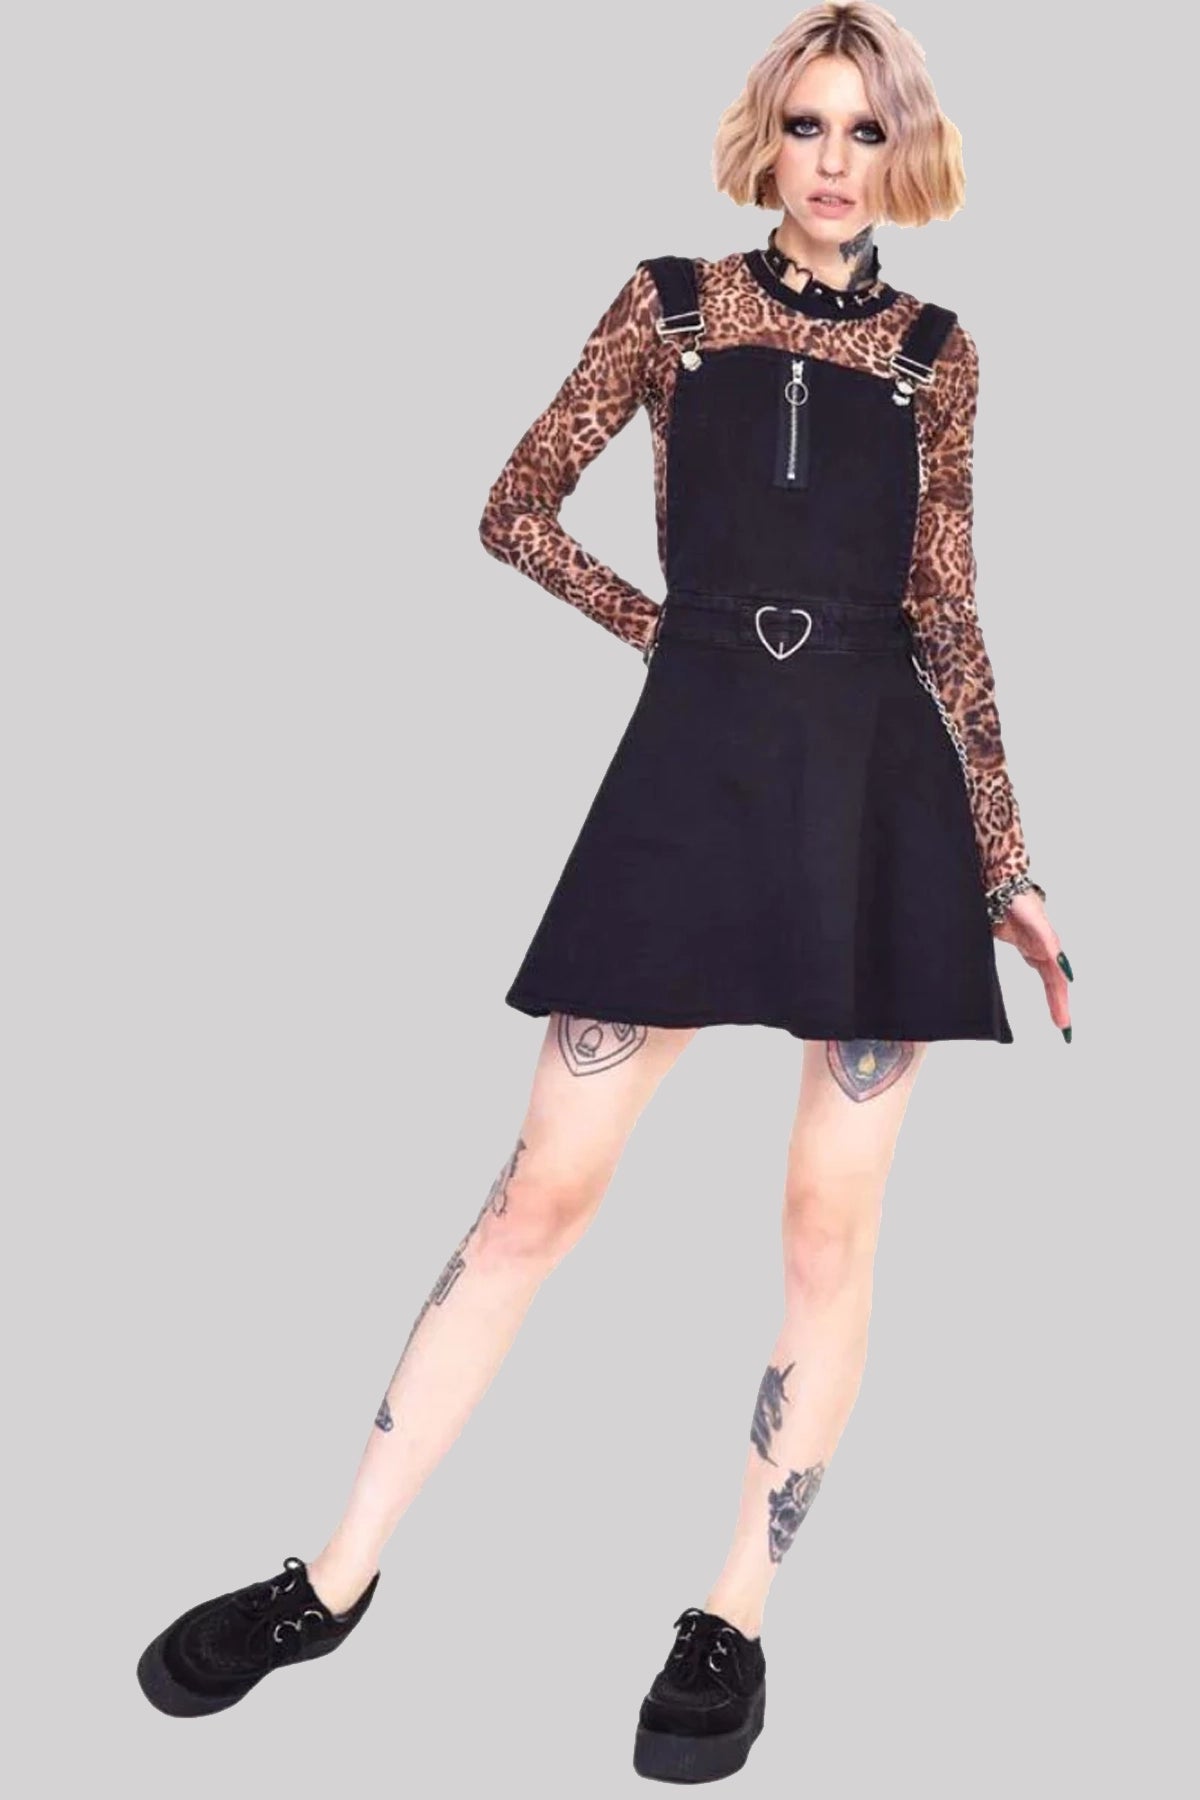 Jawbreaker Love Me Right Dungaree Style Gothic Dress